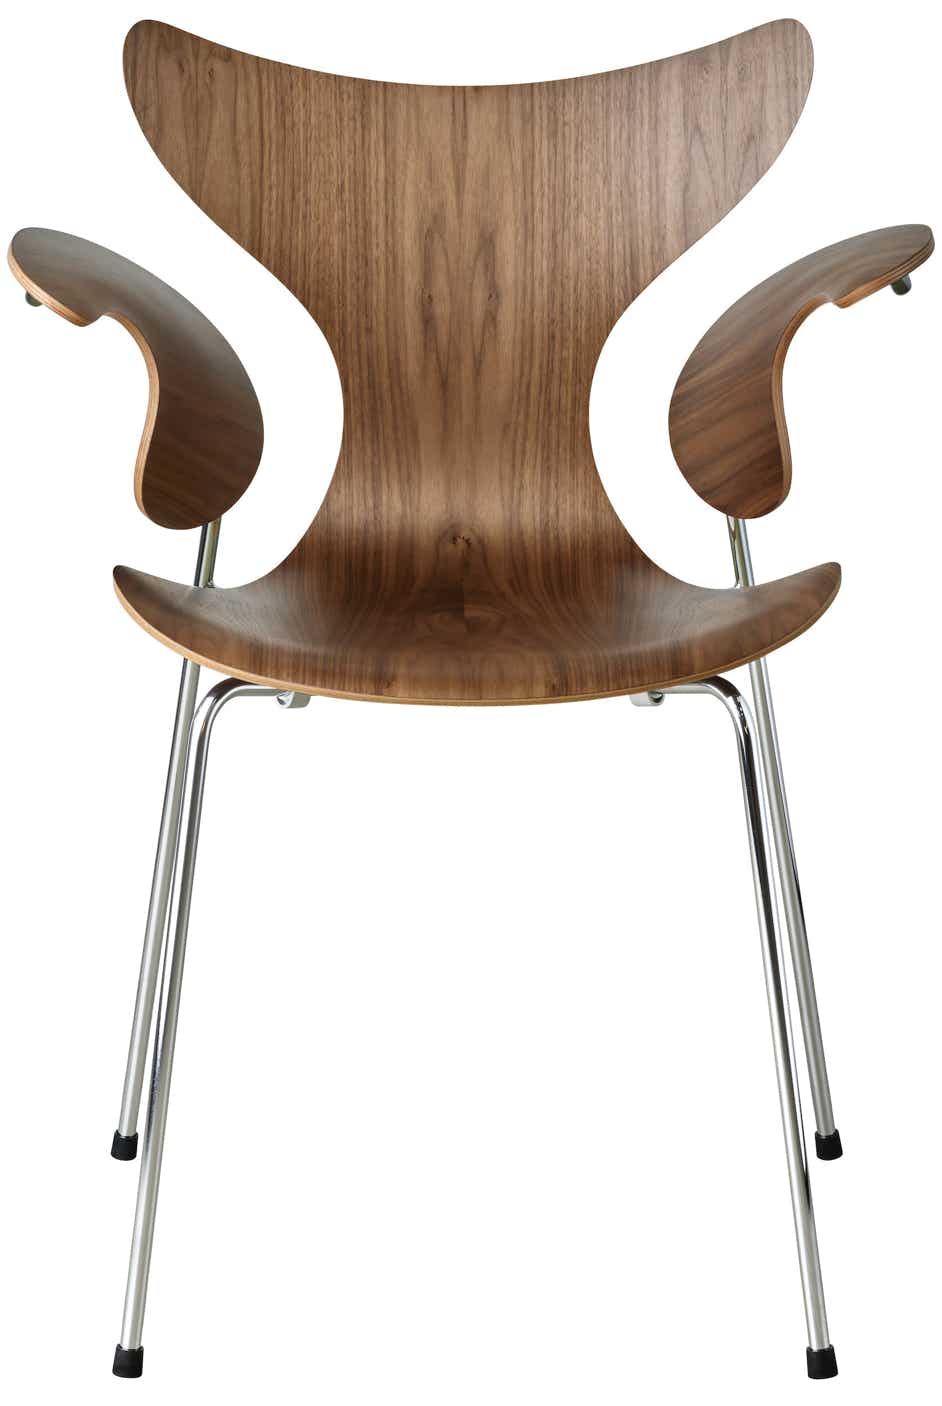 Lily chair   Fritz Hansen – Arne Jacobsen, 1968/70